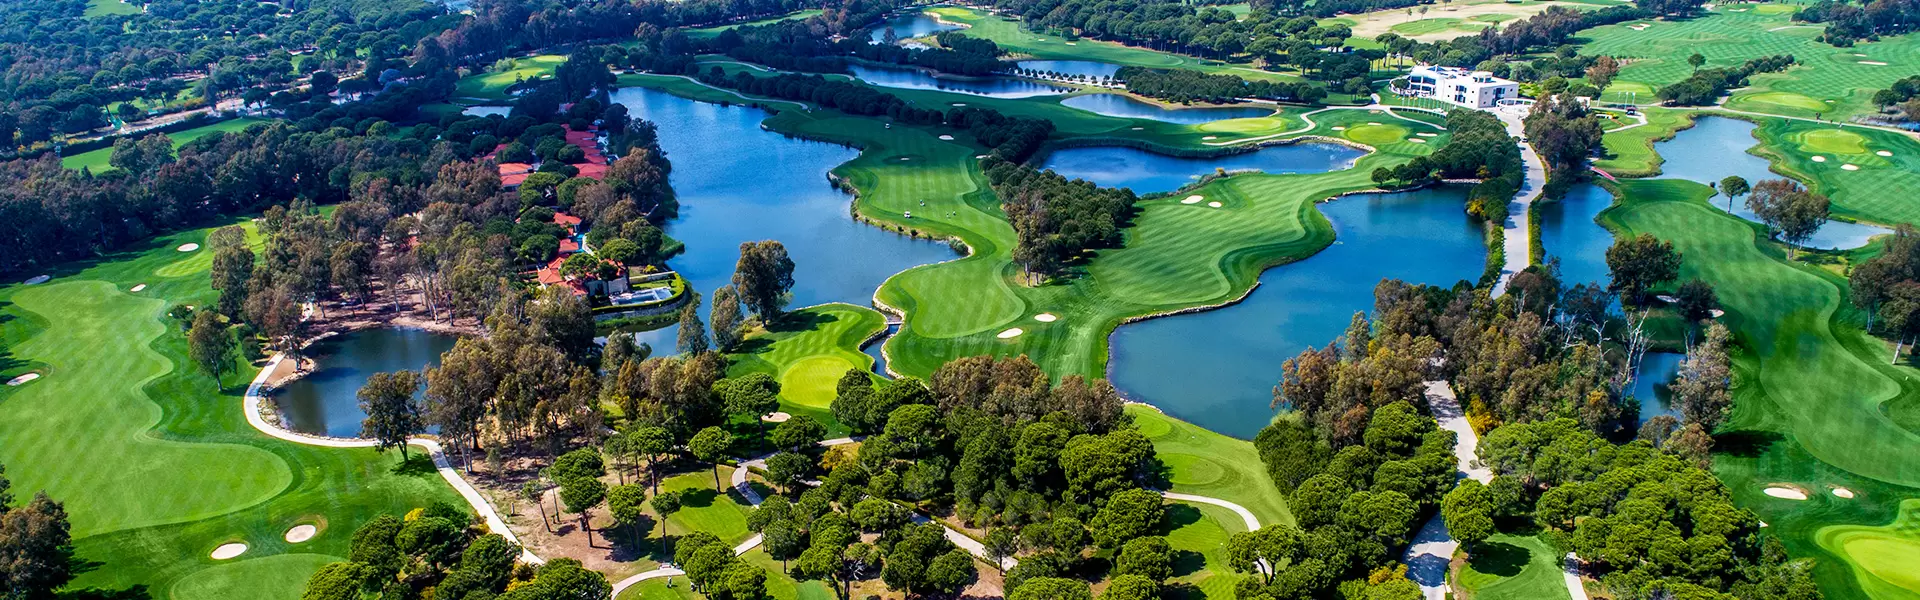 Antalya Golf Club: The Pasha